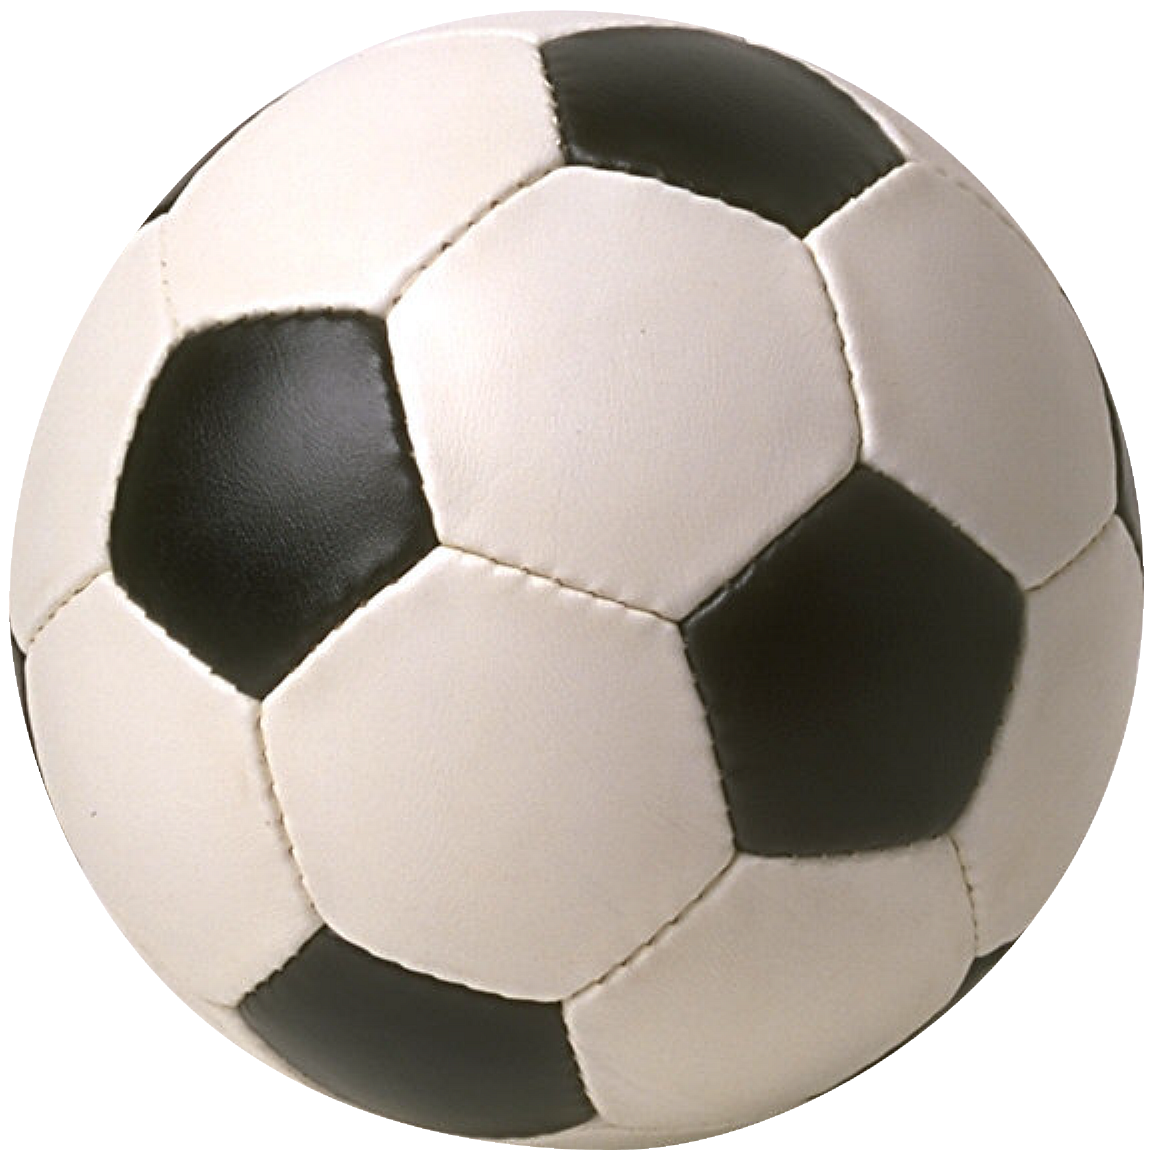 Football Ball Png Image - Football, Transparent background PNG HD thumbnail